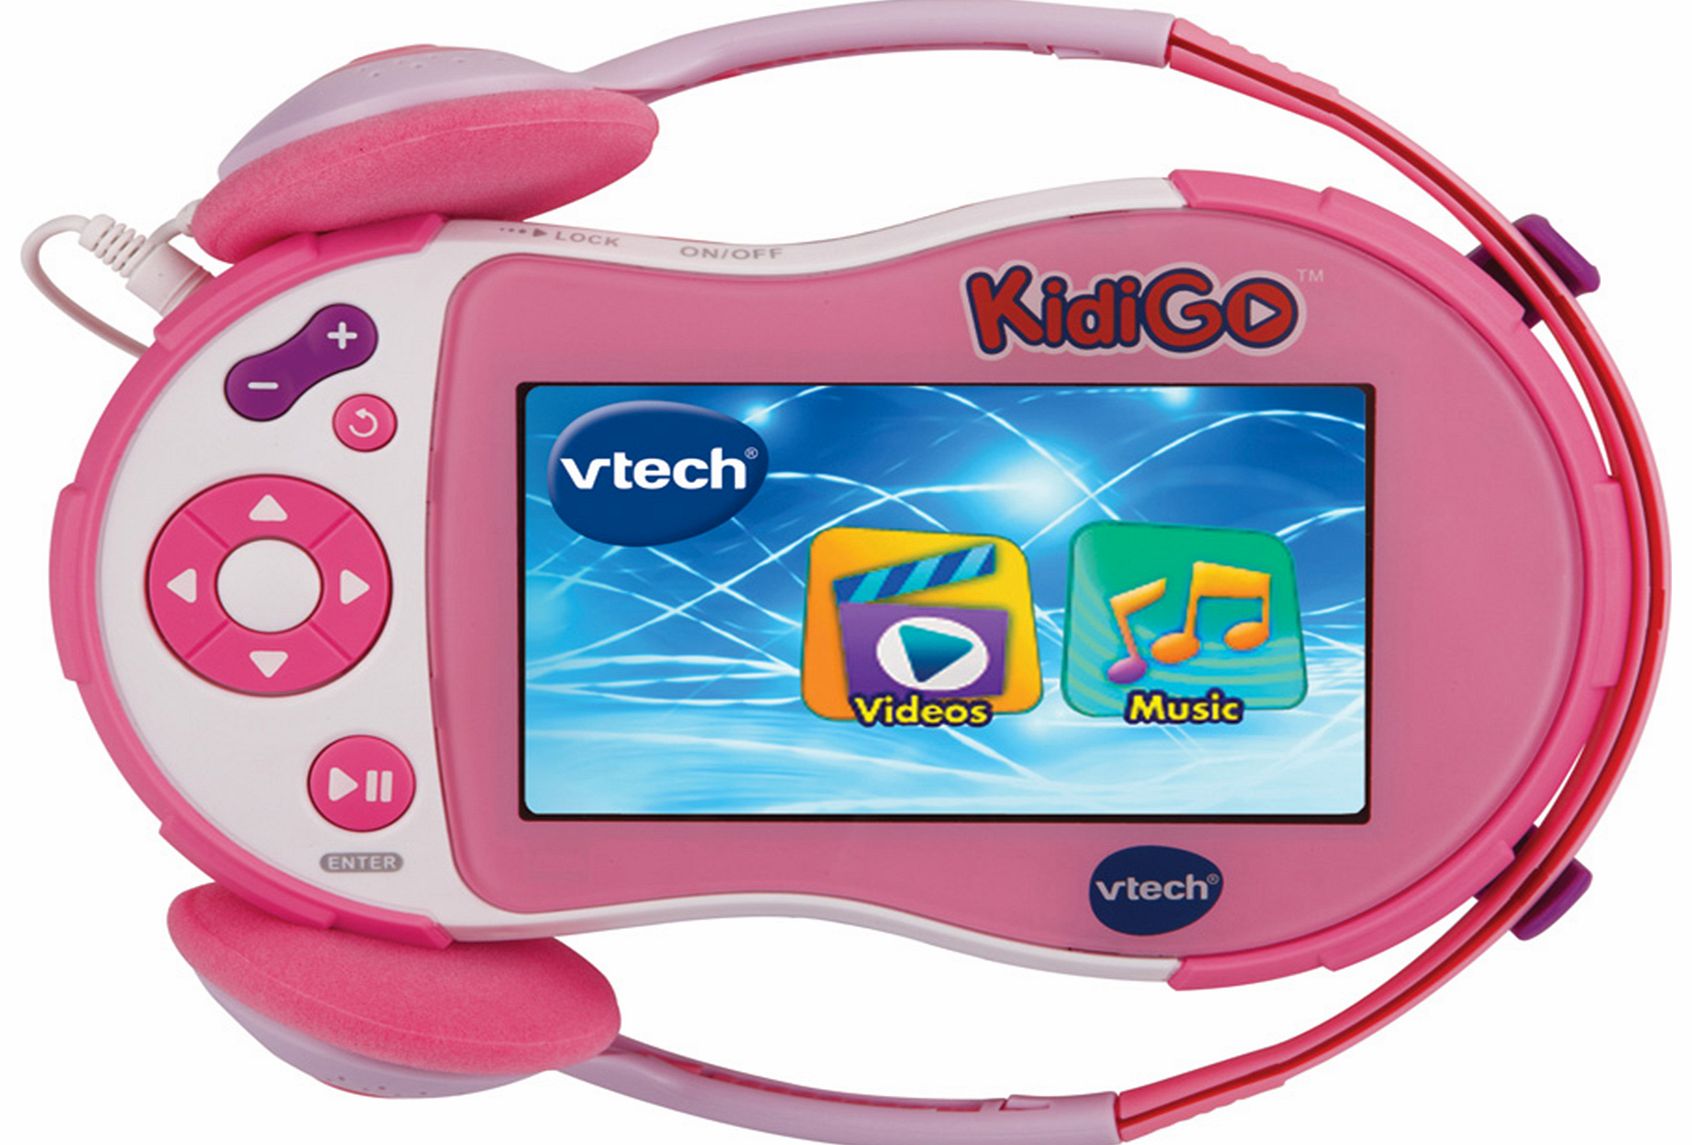 Vtech KidiGo - Pink